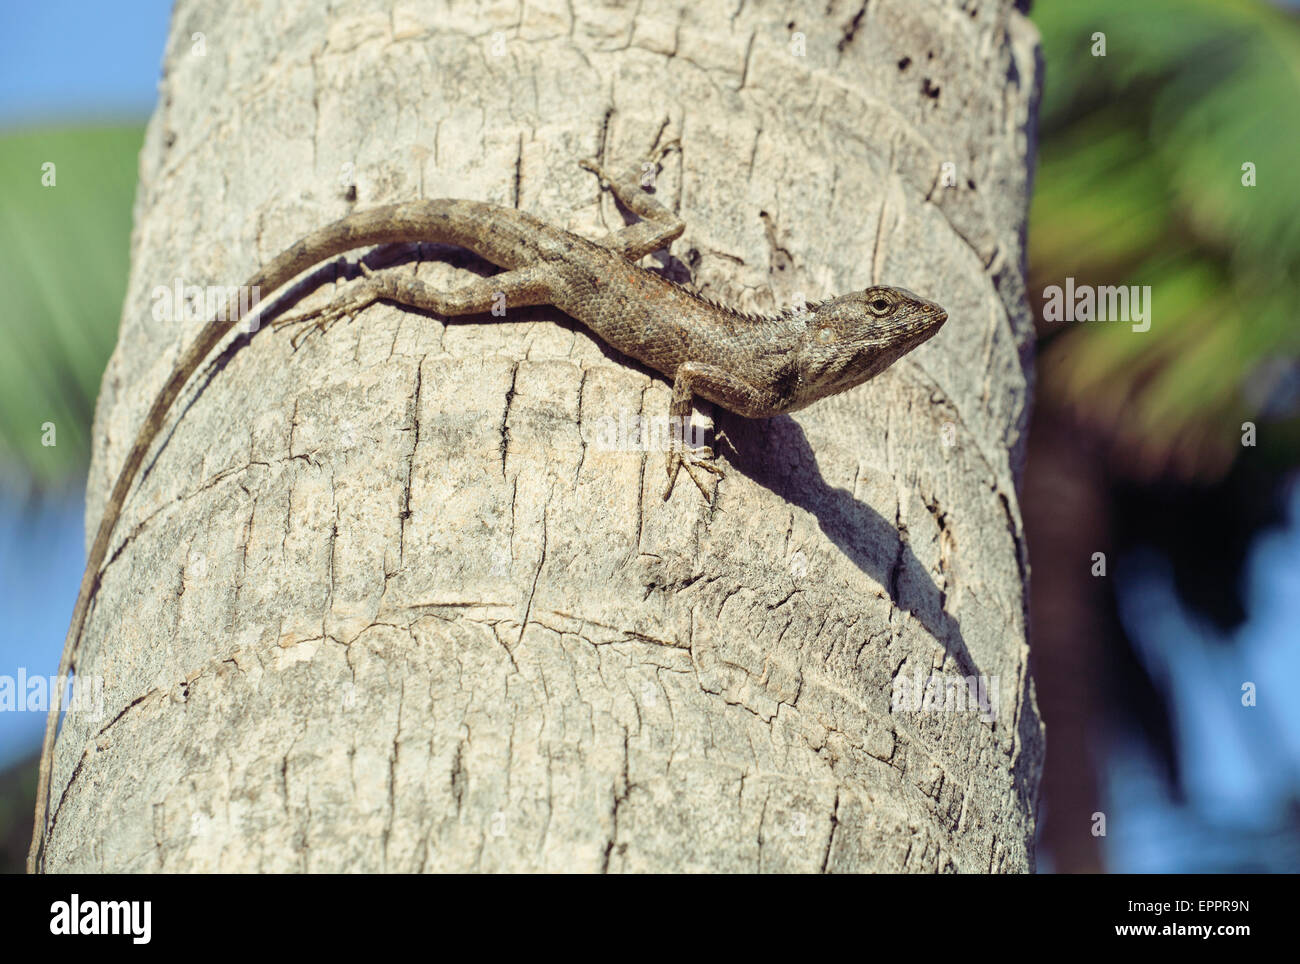 medium lizard in wild nature on palm tree Stock Photo